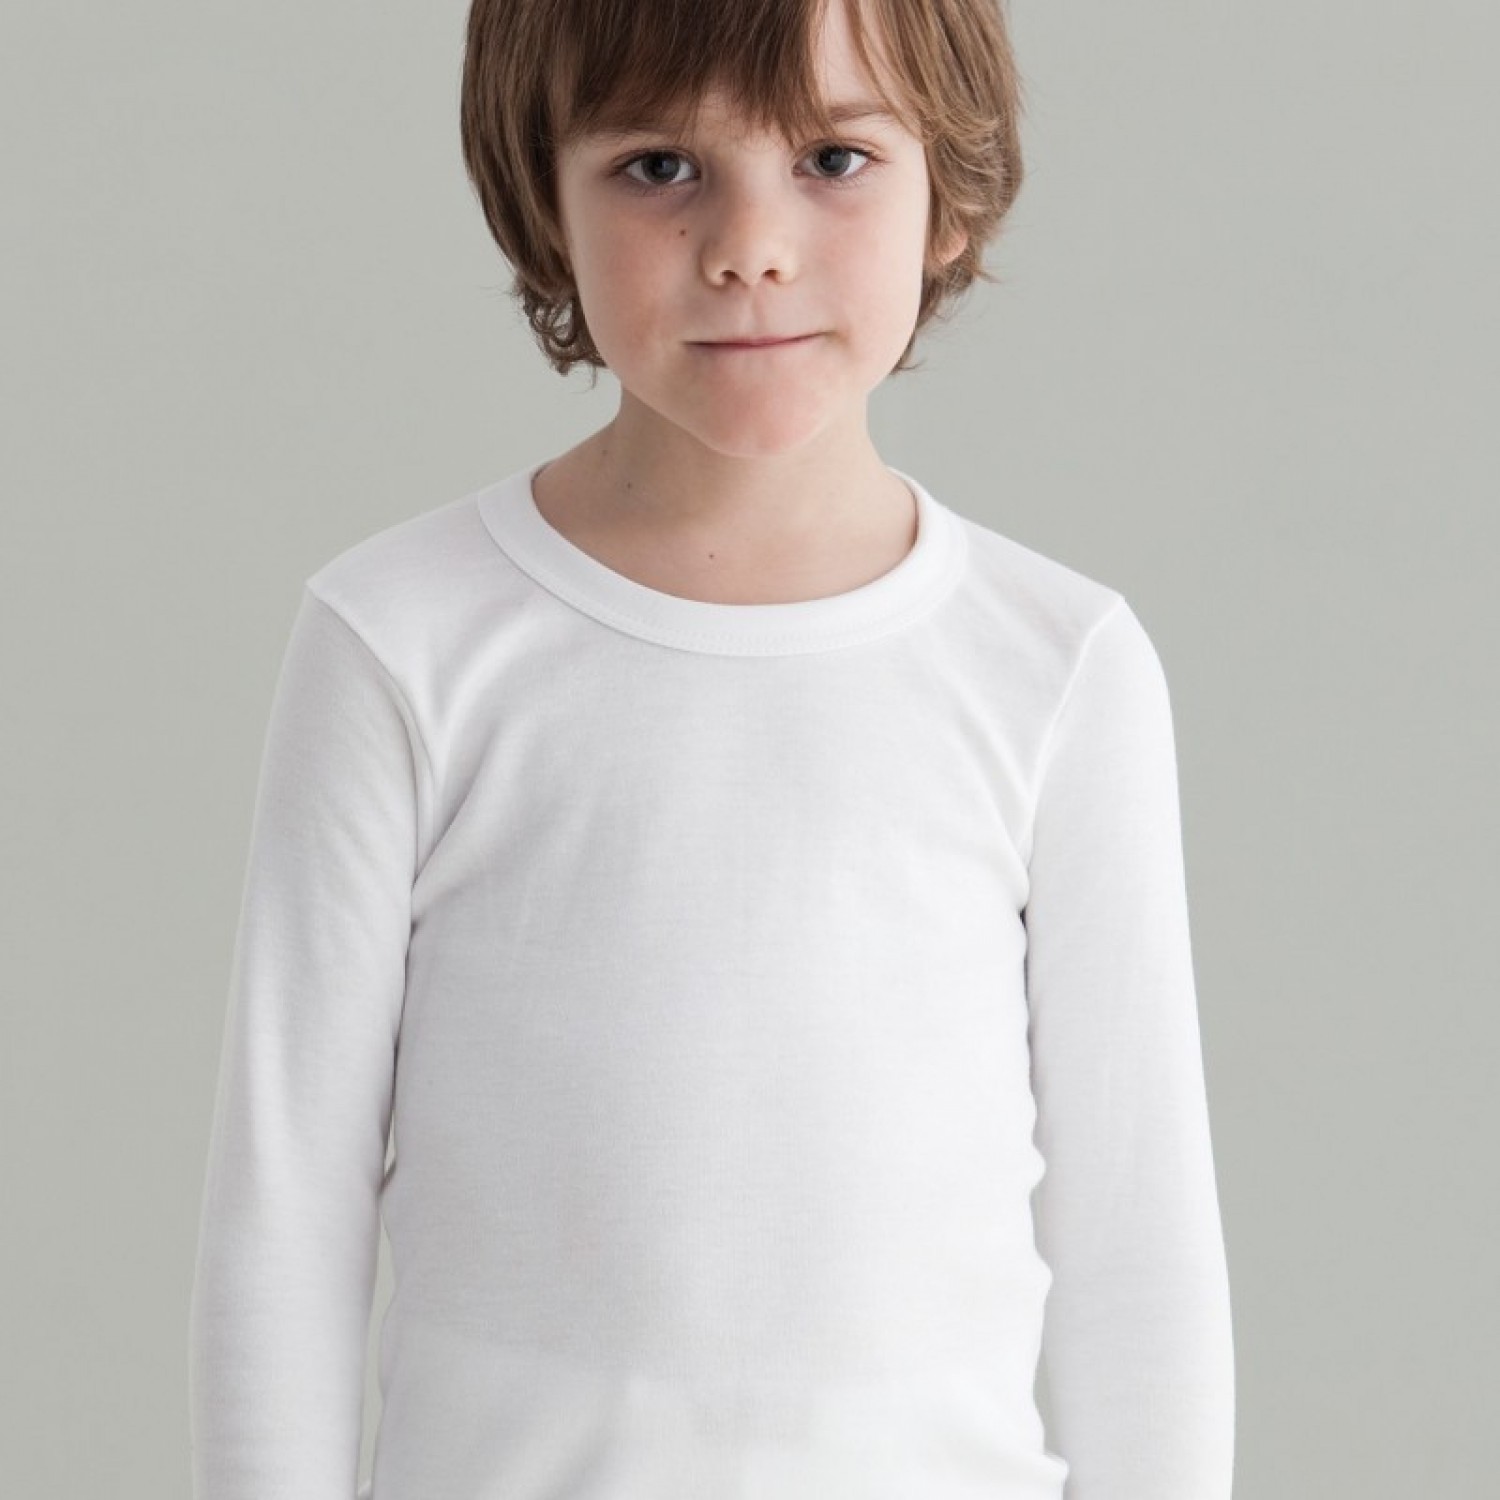 Camiseta manga larga niño blanca